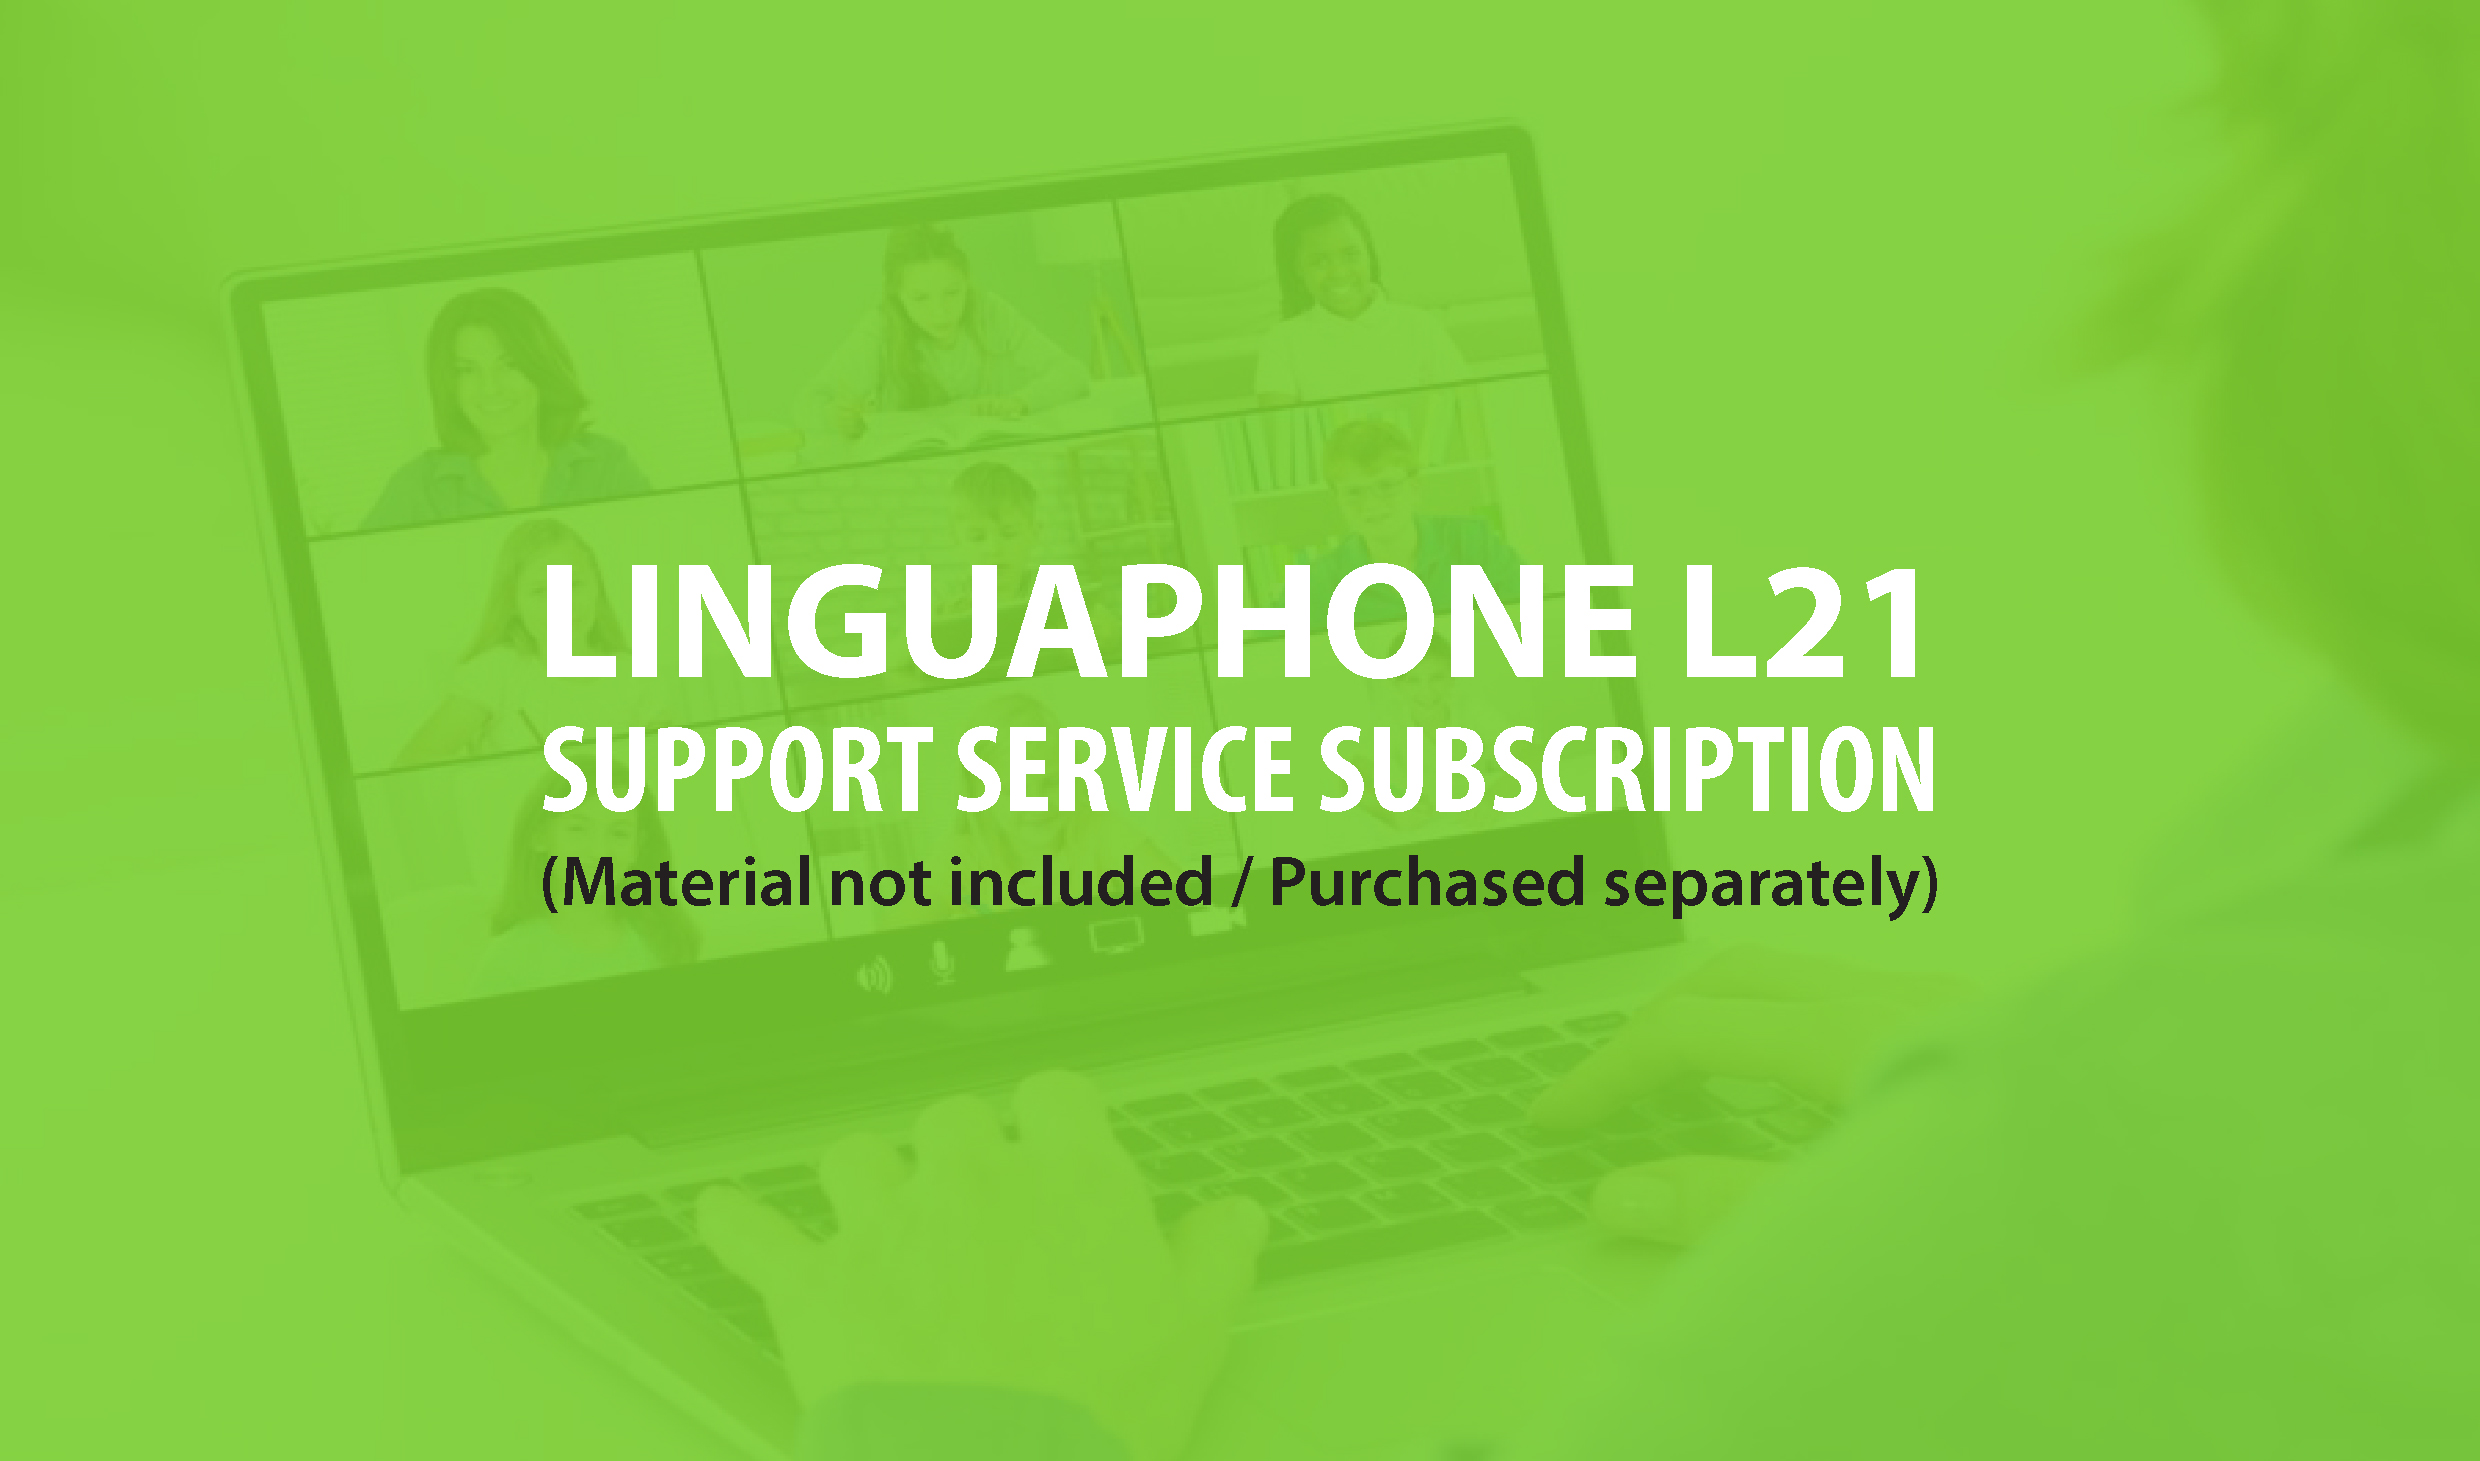 Linguaphone L21 support service subscription-05